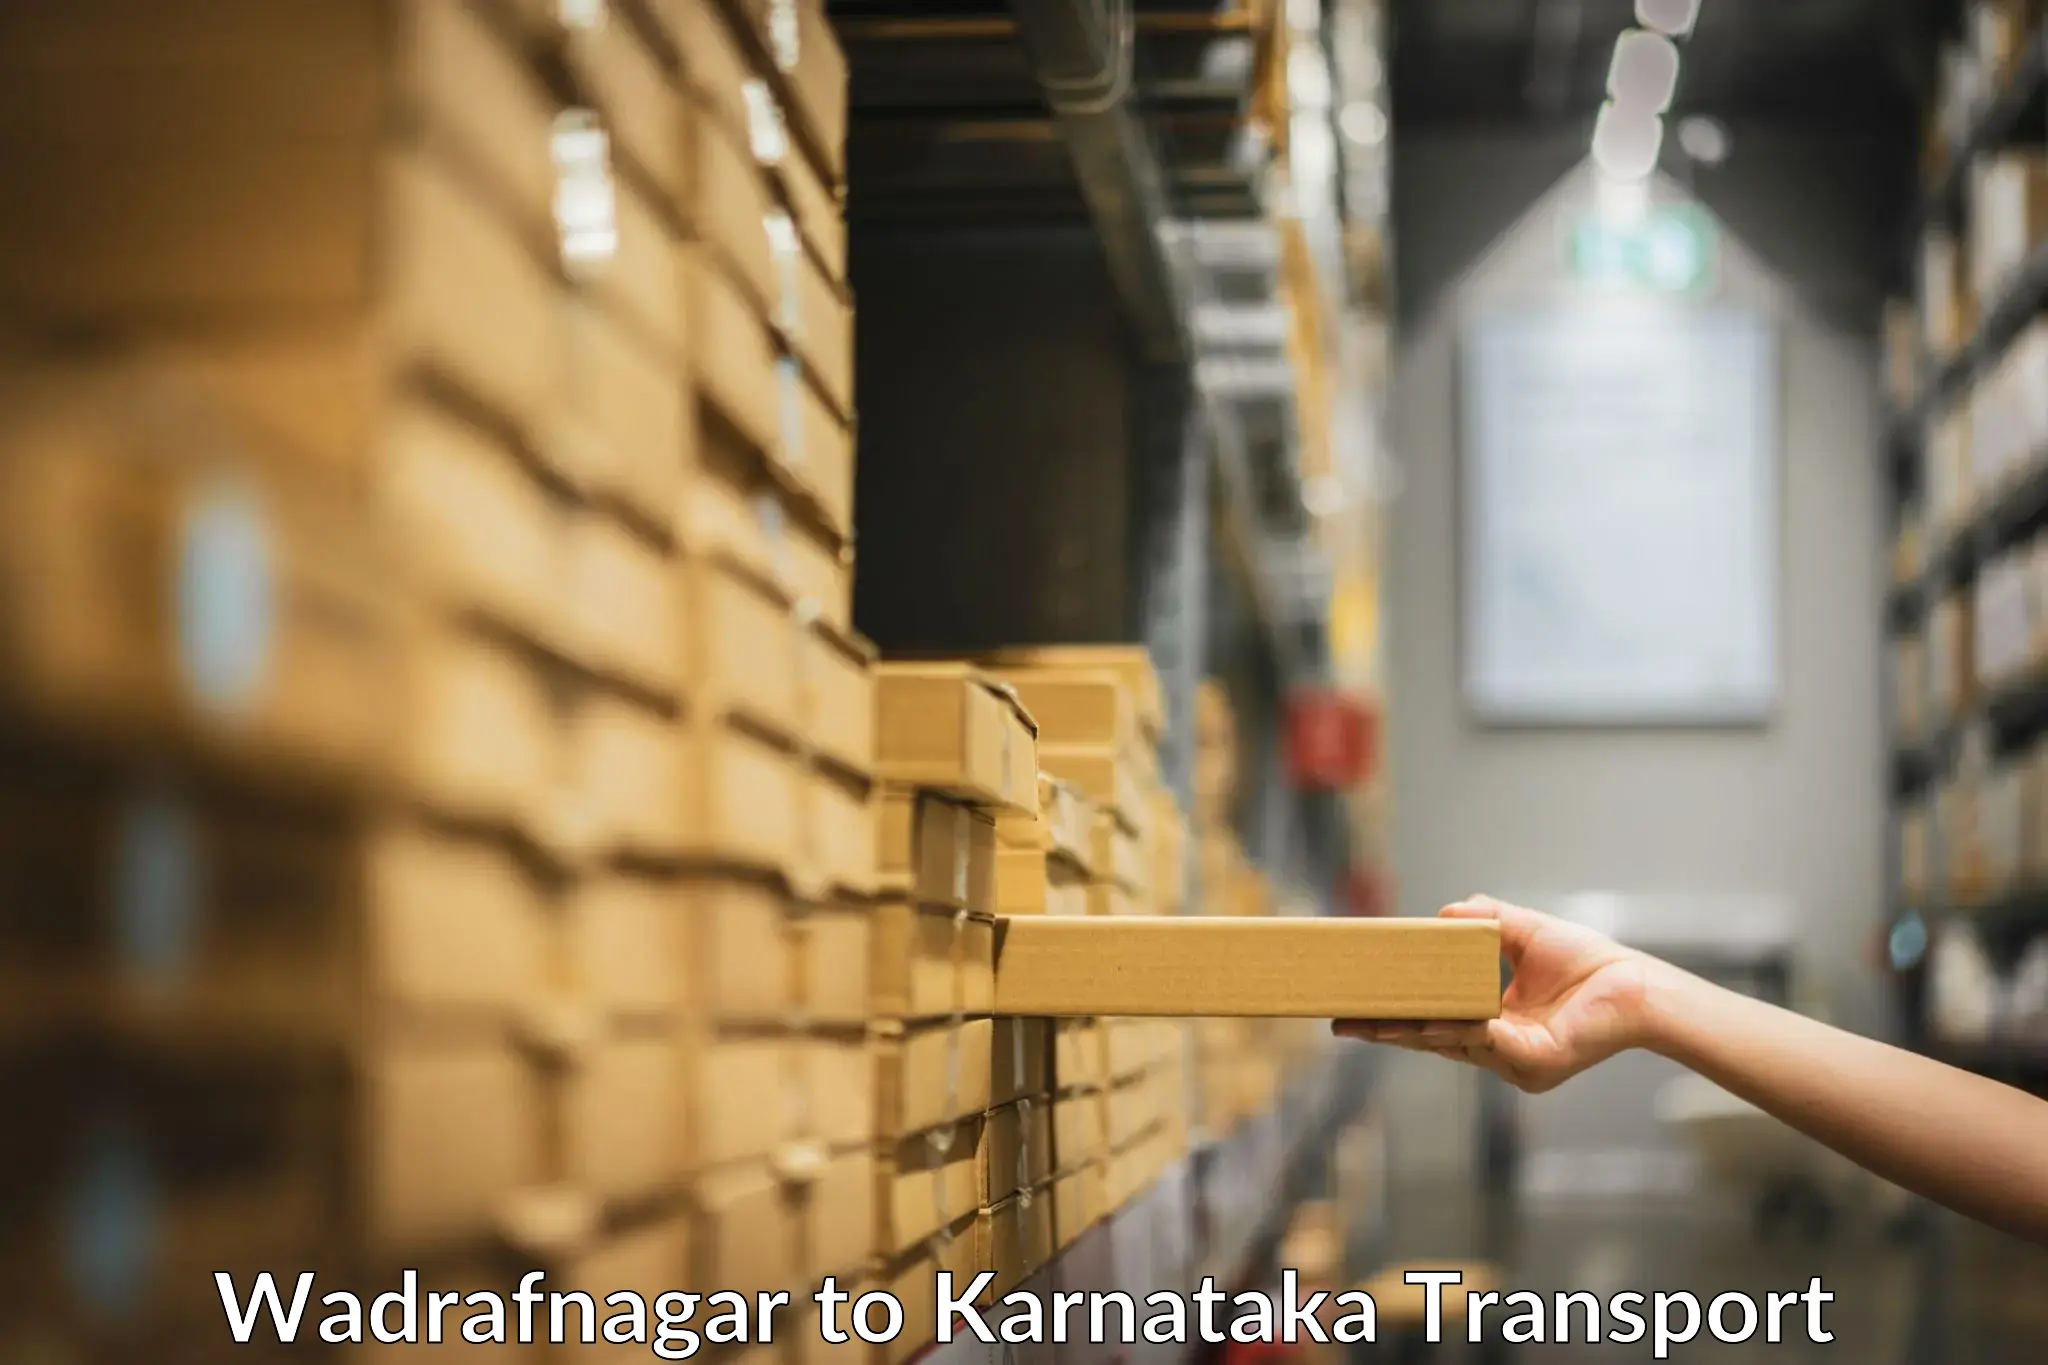 Truck transport companies in India Wadrafnagar to Hirekerur